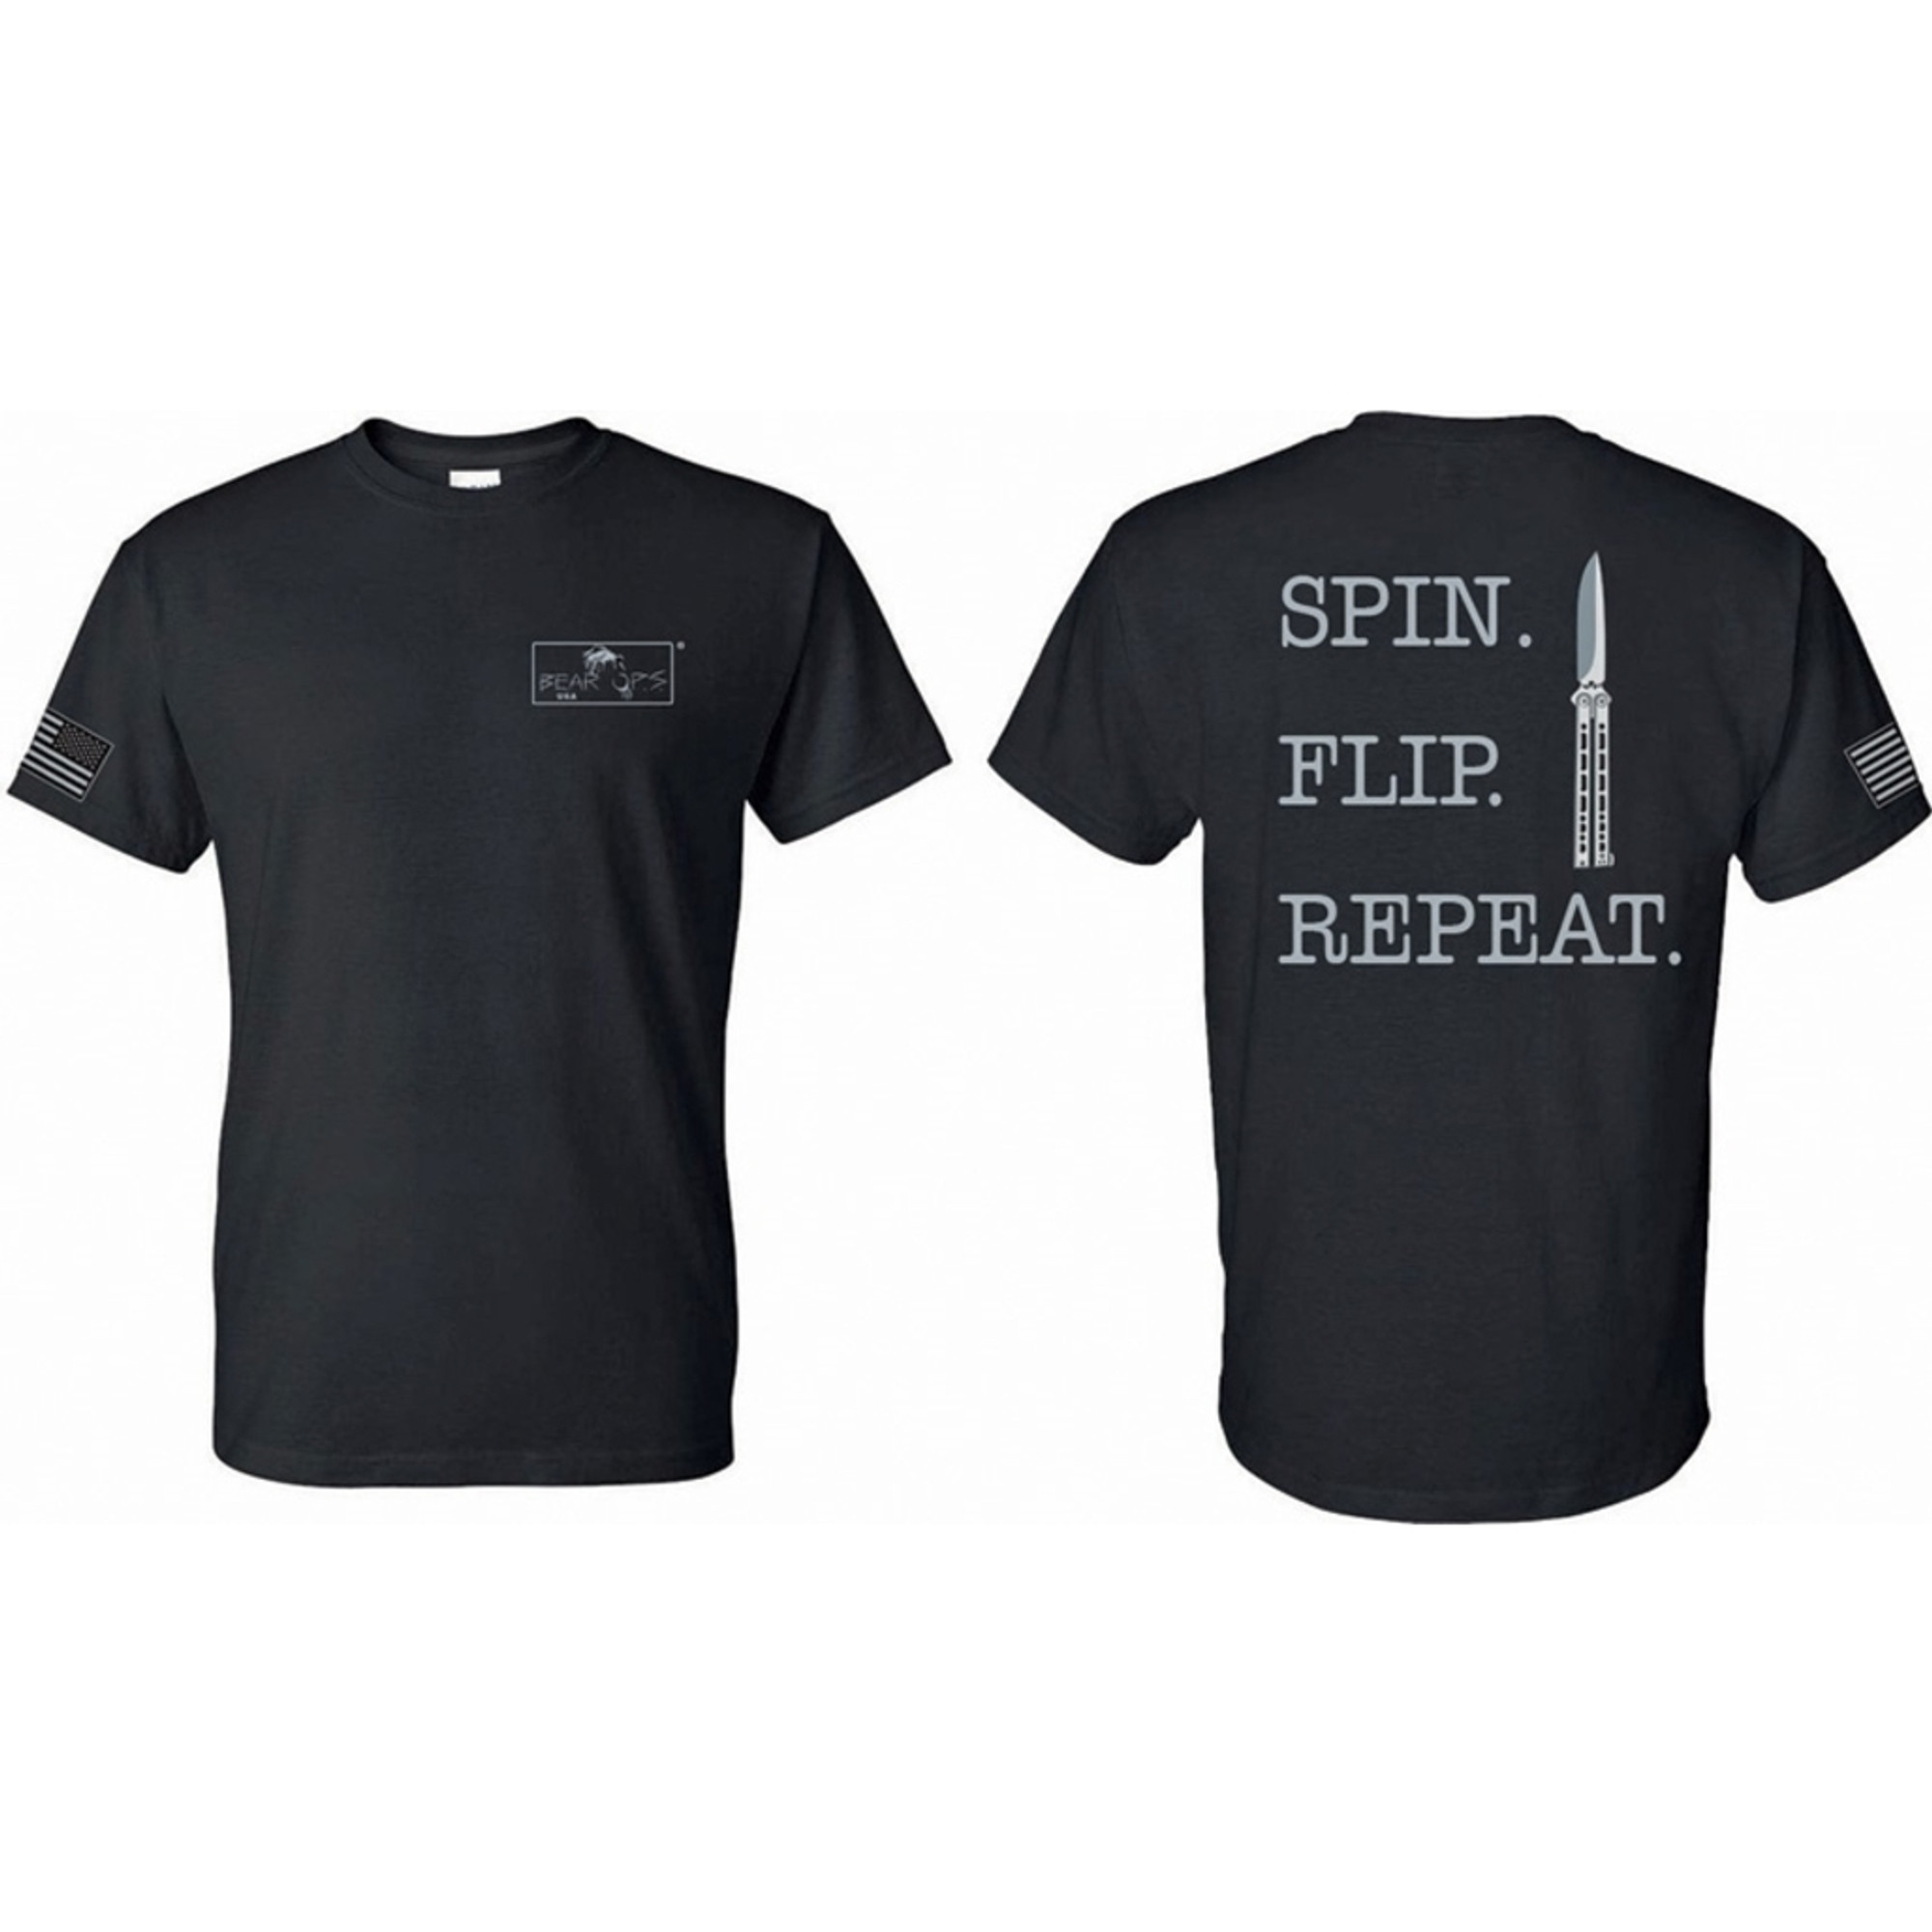 Spin Flip Repeat T-Shirt 3XL